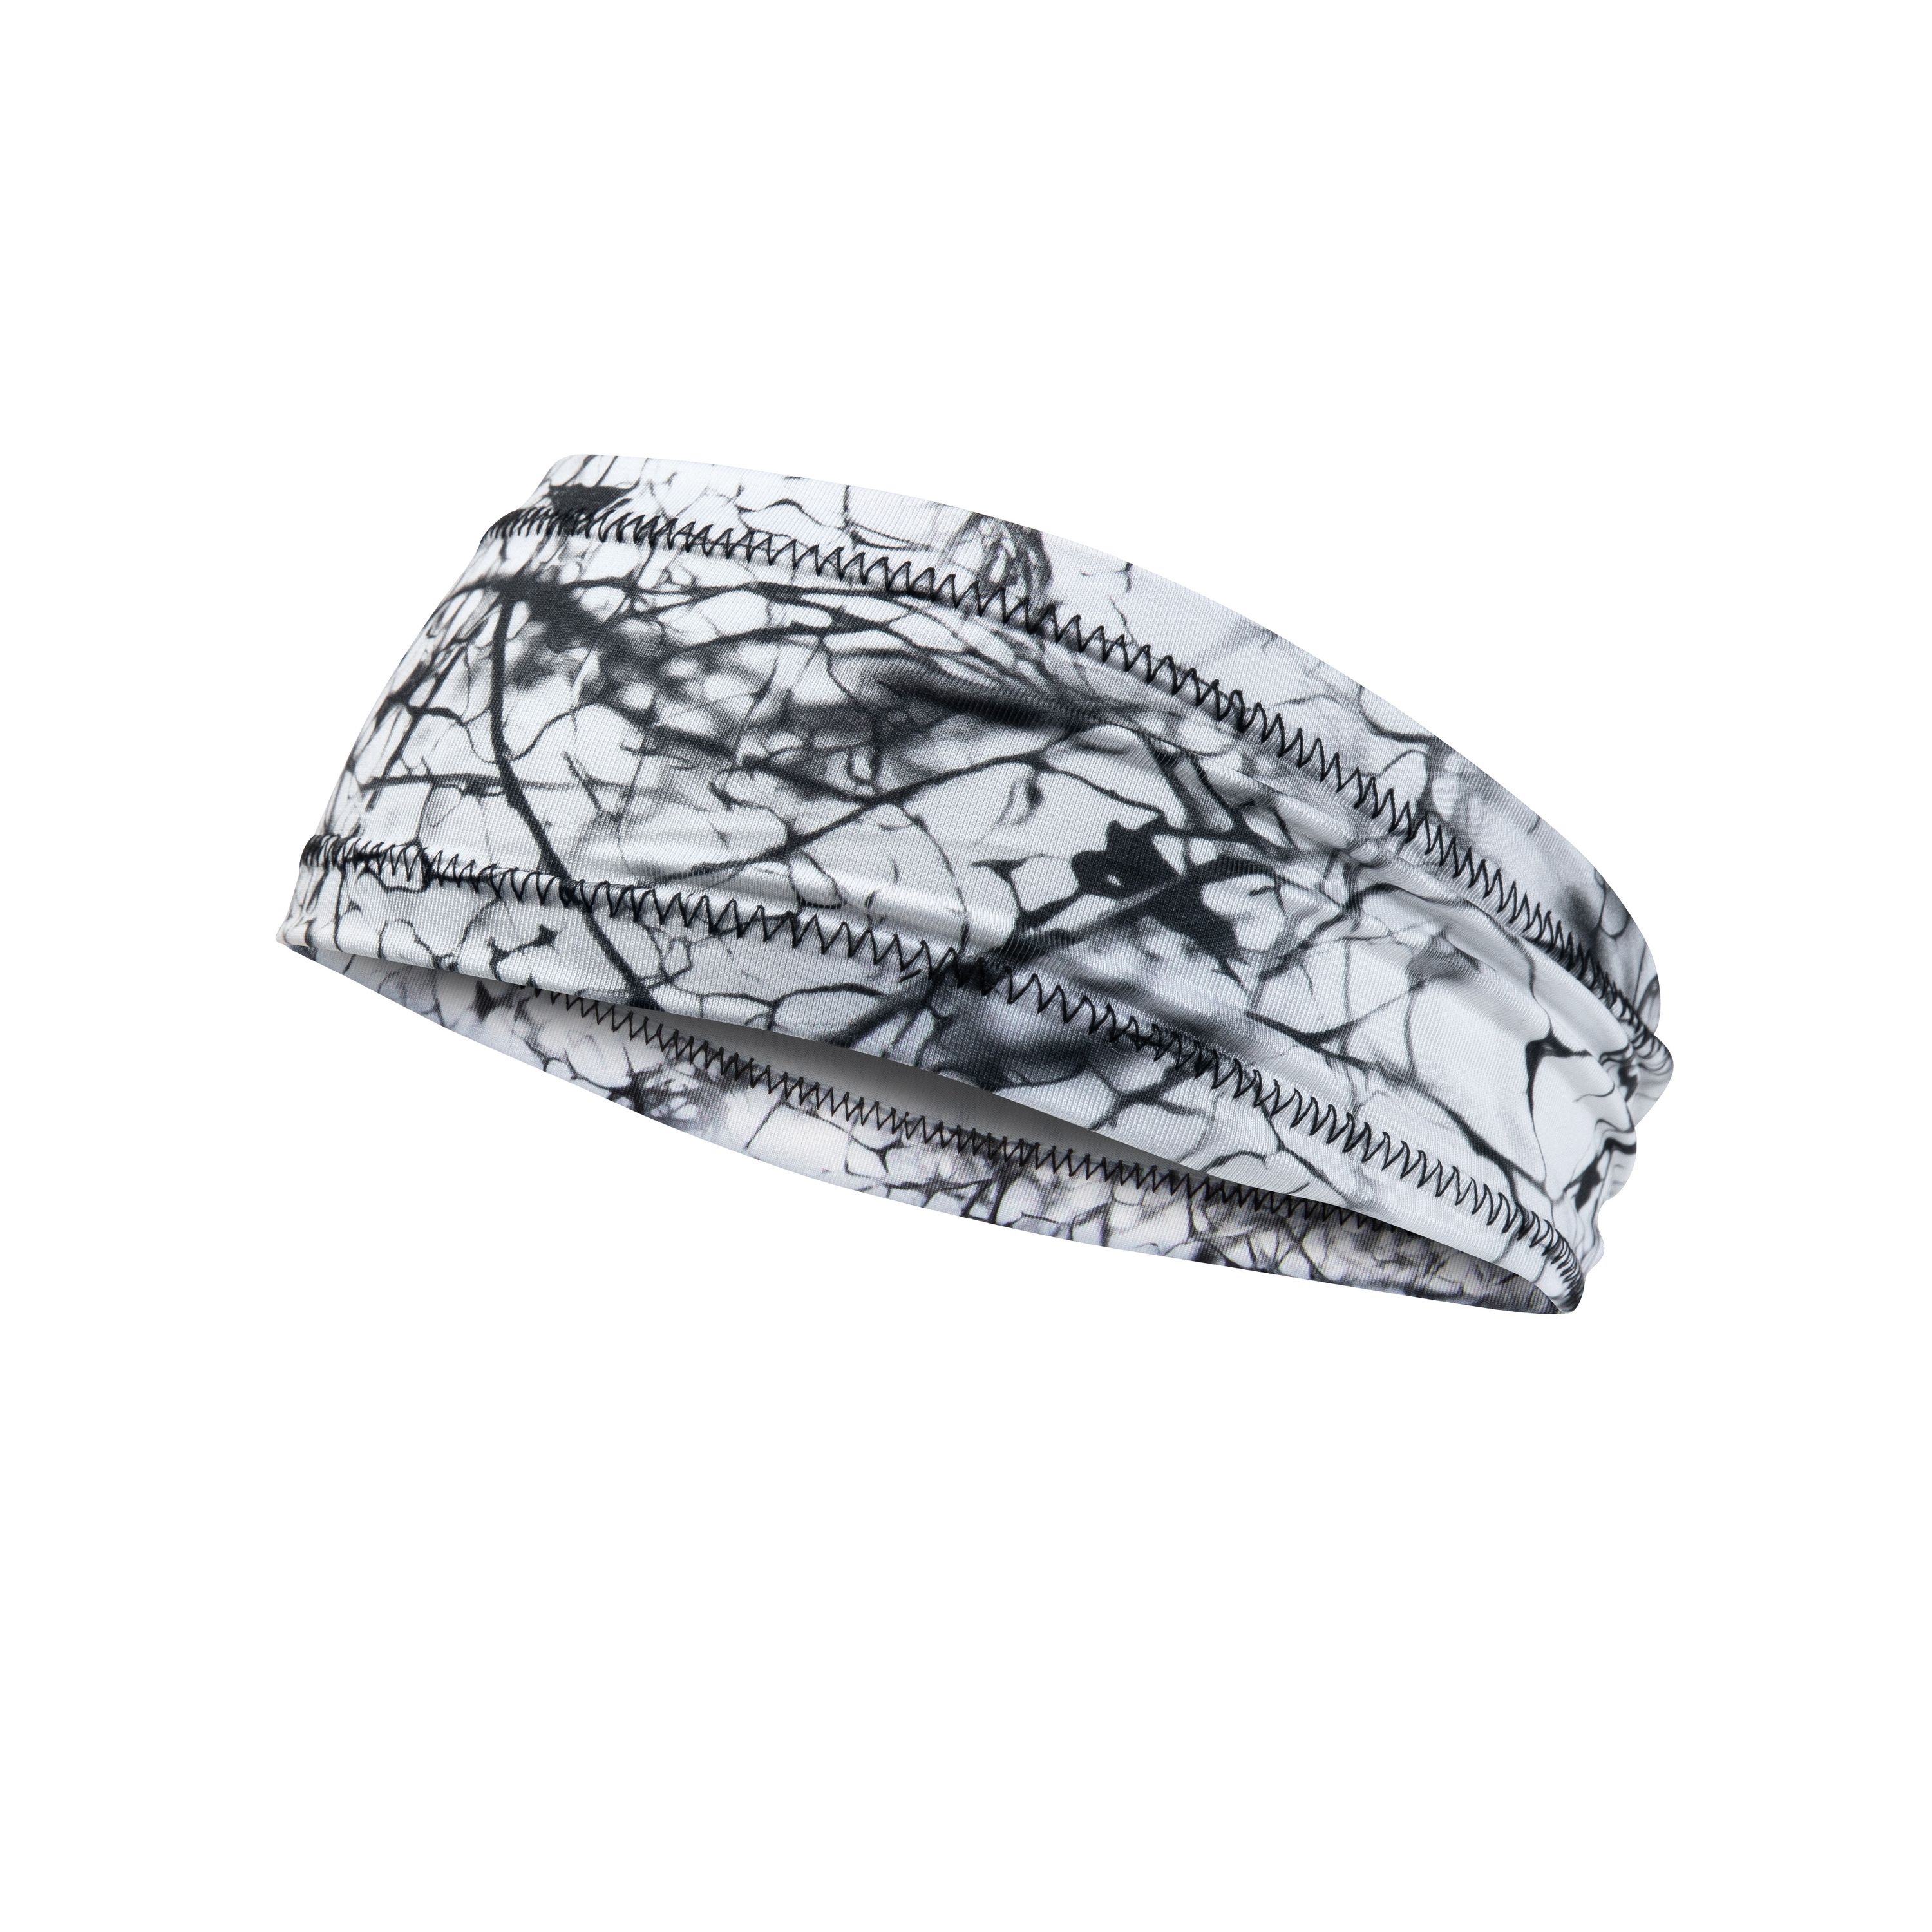 FITLETIC – Headbands Marble schwarz-weiß